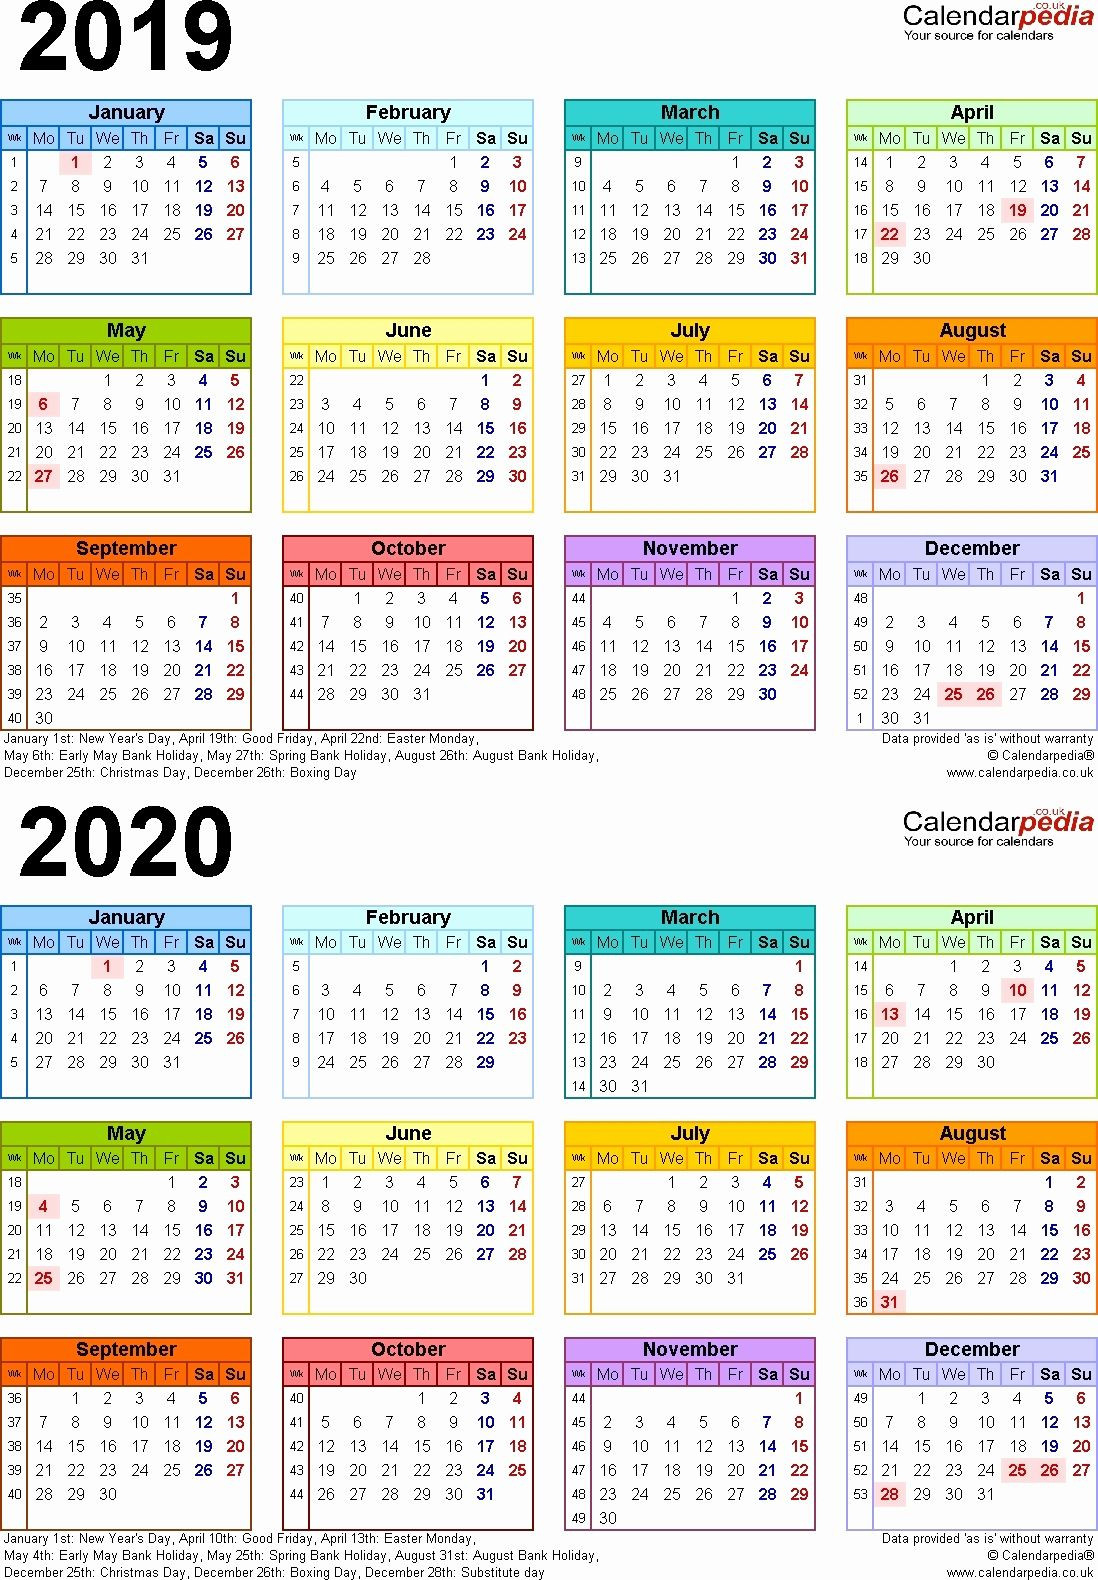 20+ Calendar 2021 Qld - Free Download Printable Calendar-Google Calender 2021 With Public Holidays Qld